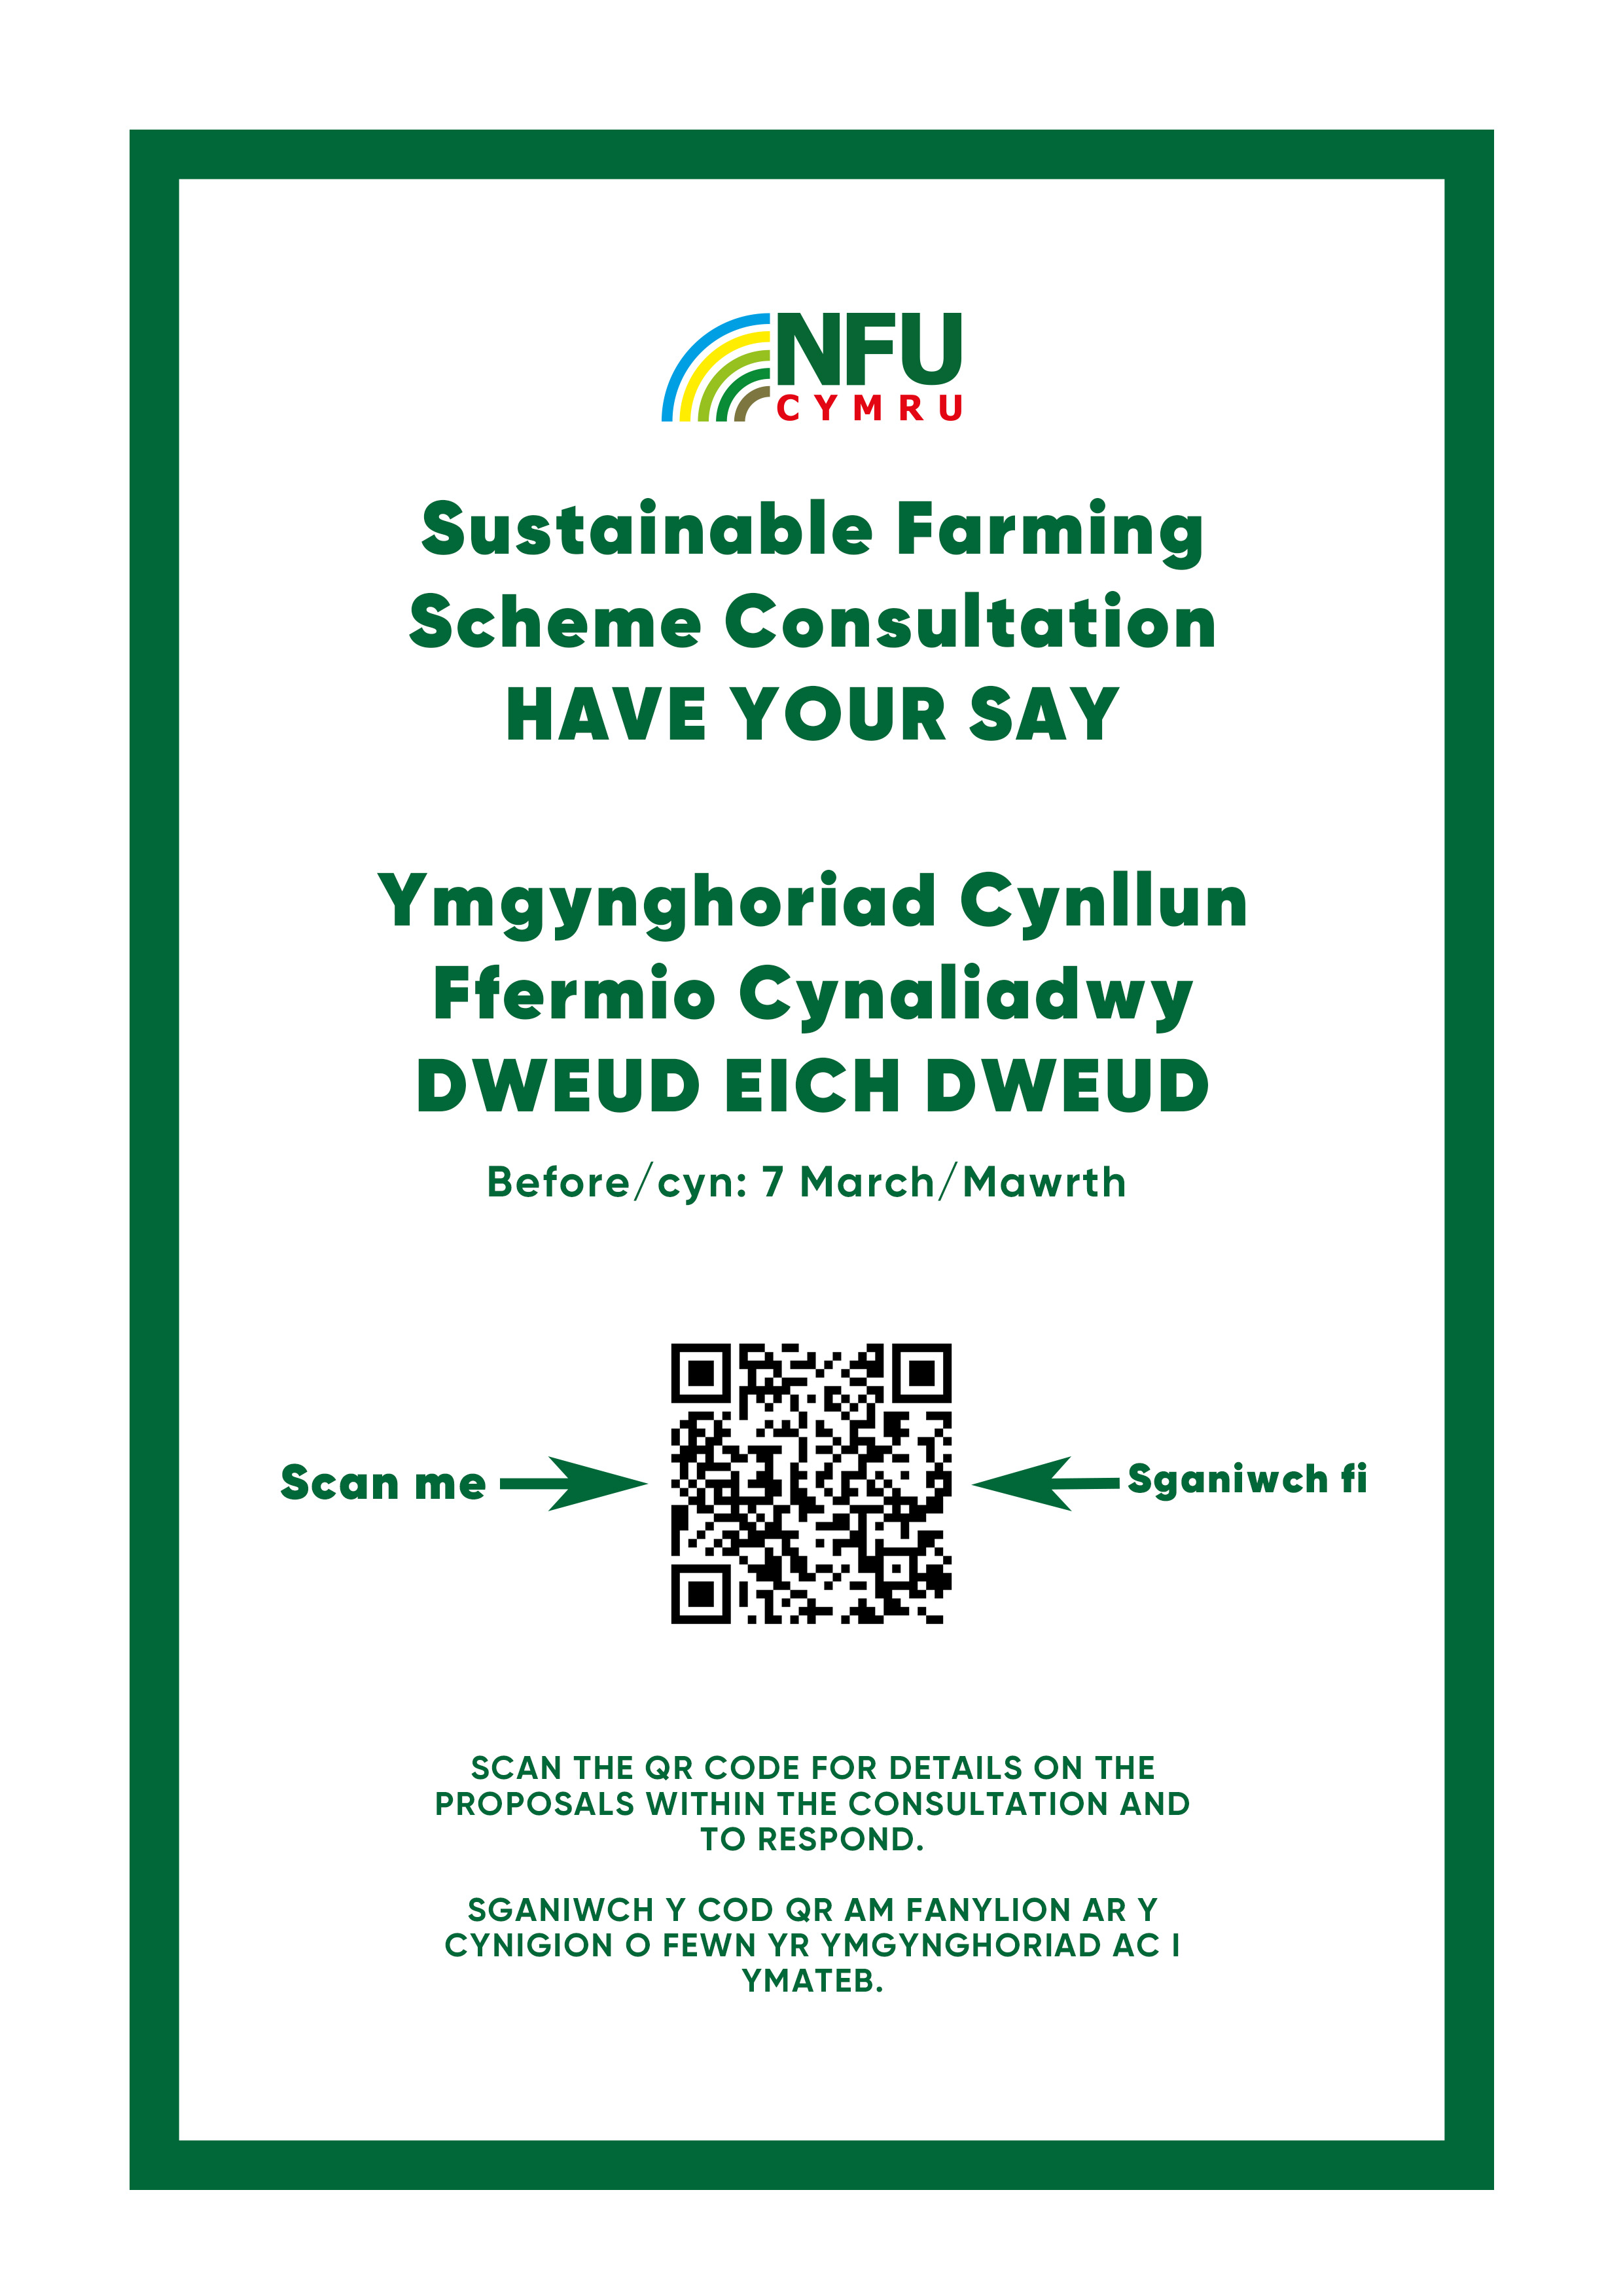 NFU Cymru SFS consultation poster